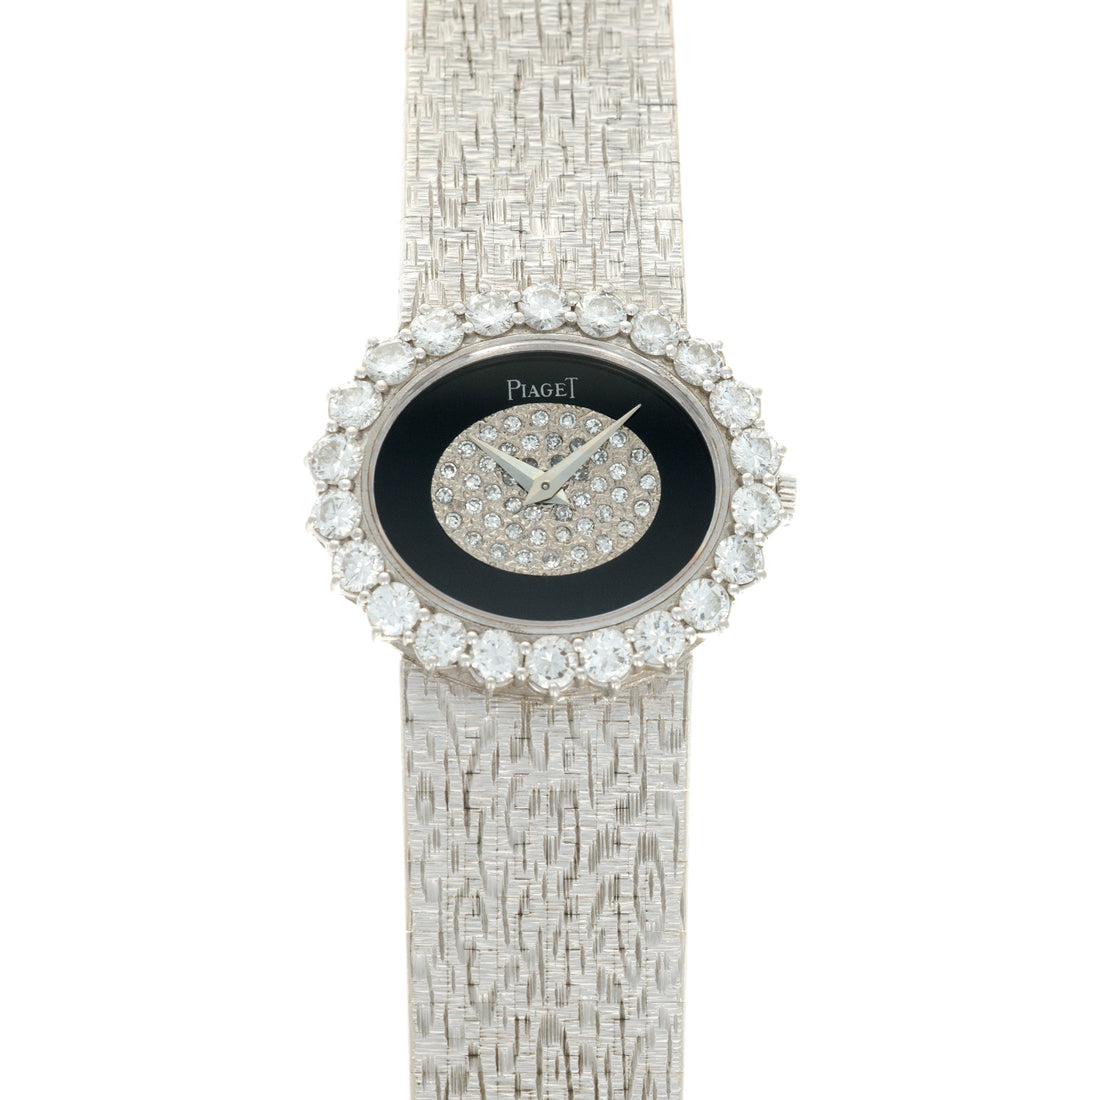 Piaget White Gold Diamond Onyx Watch, 1970s